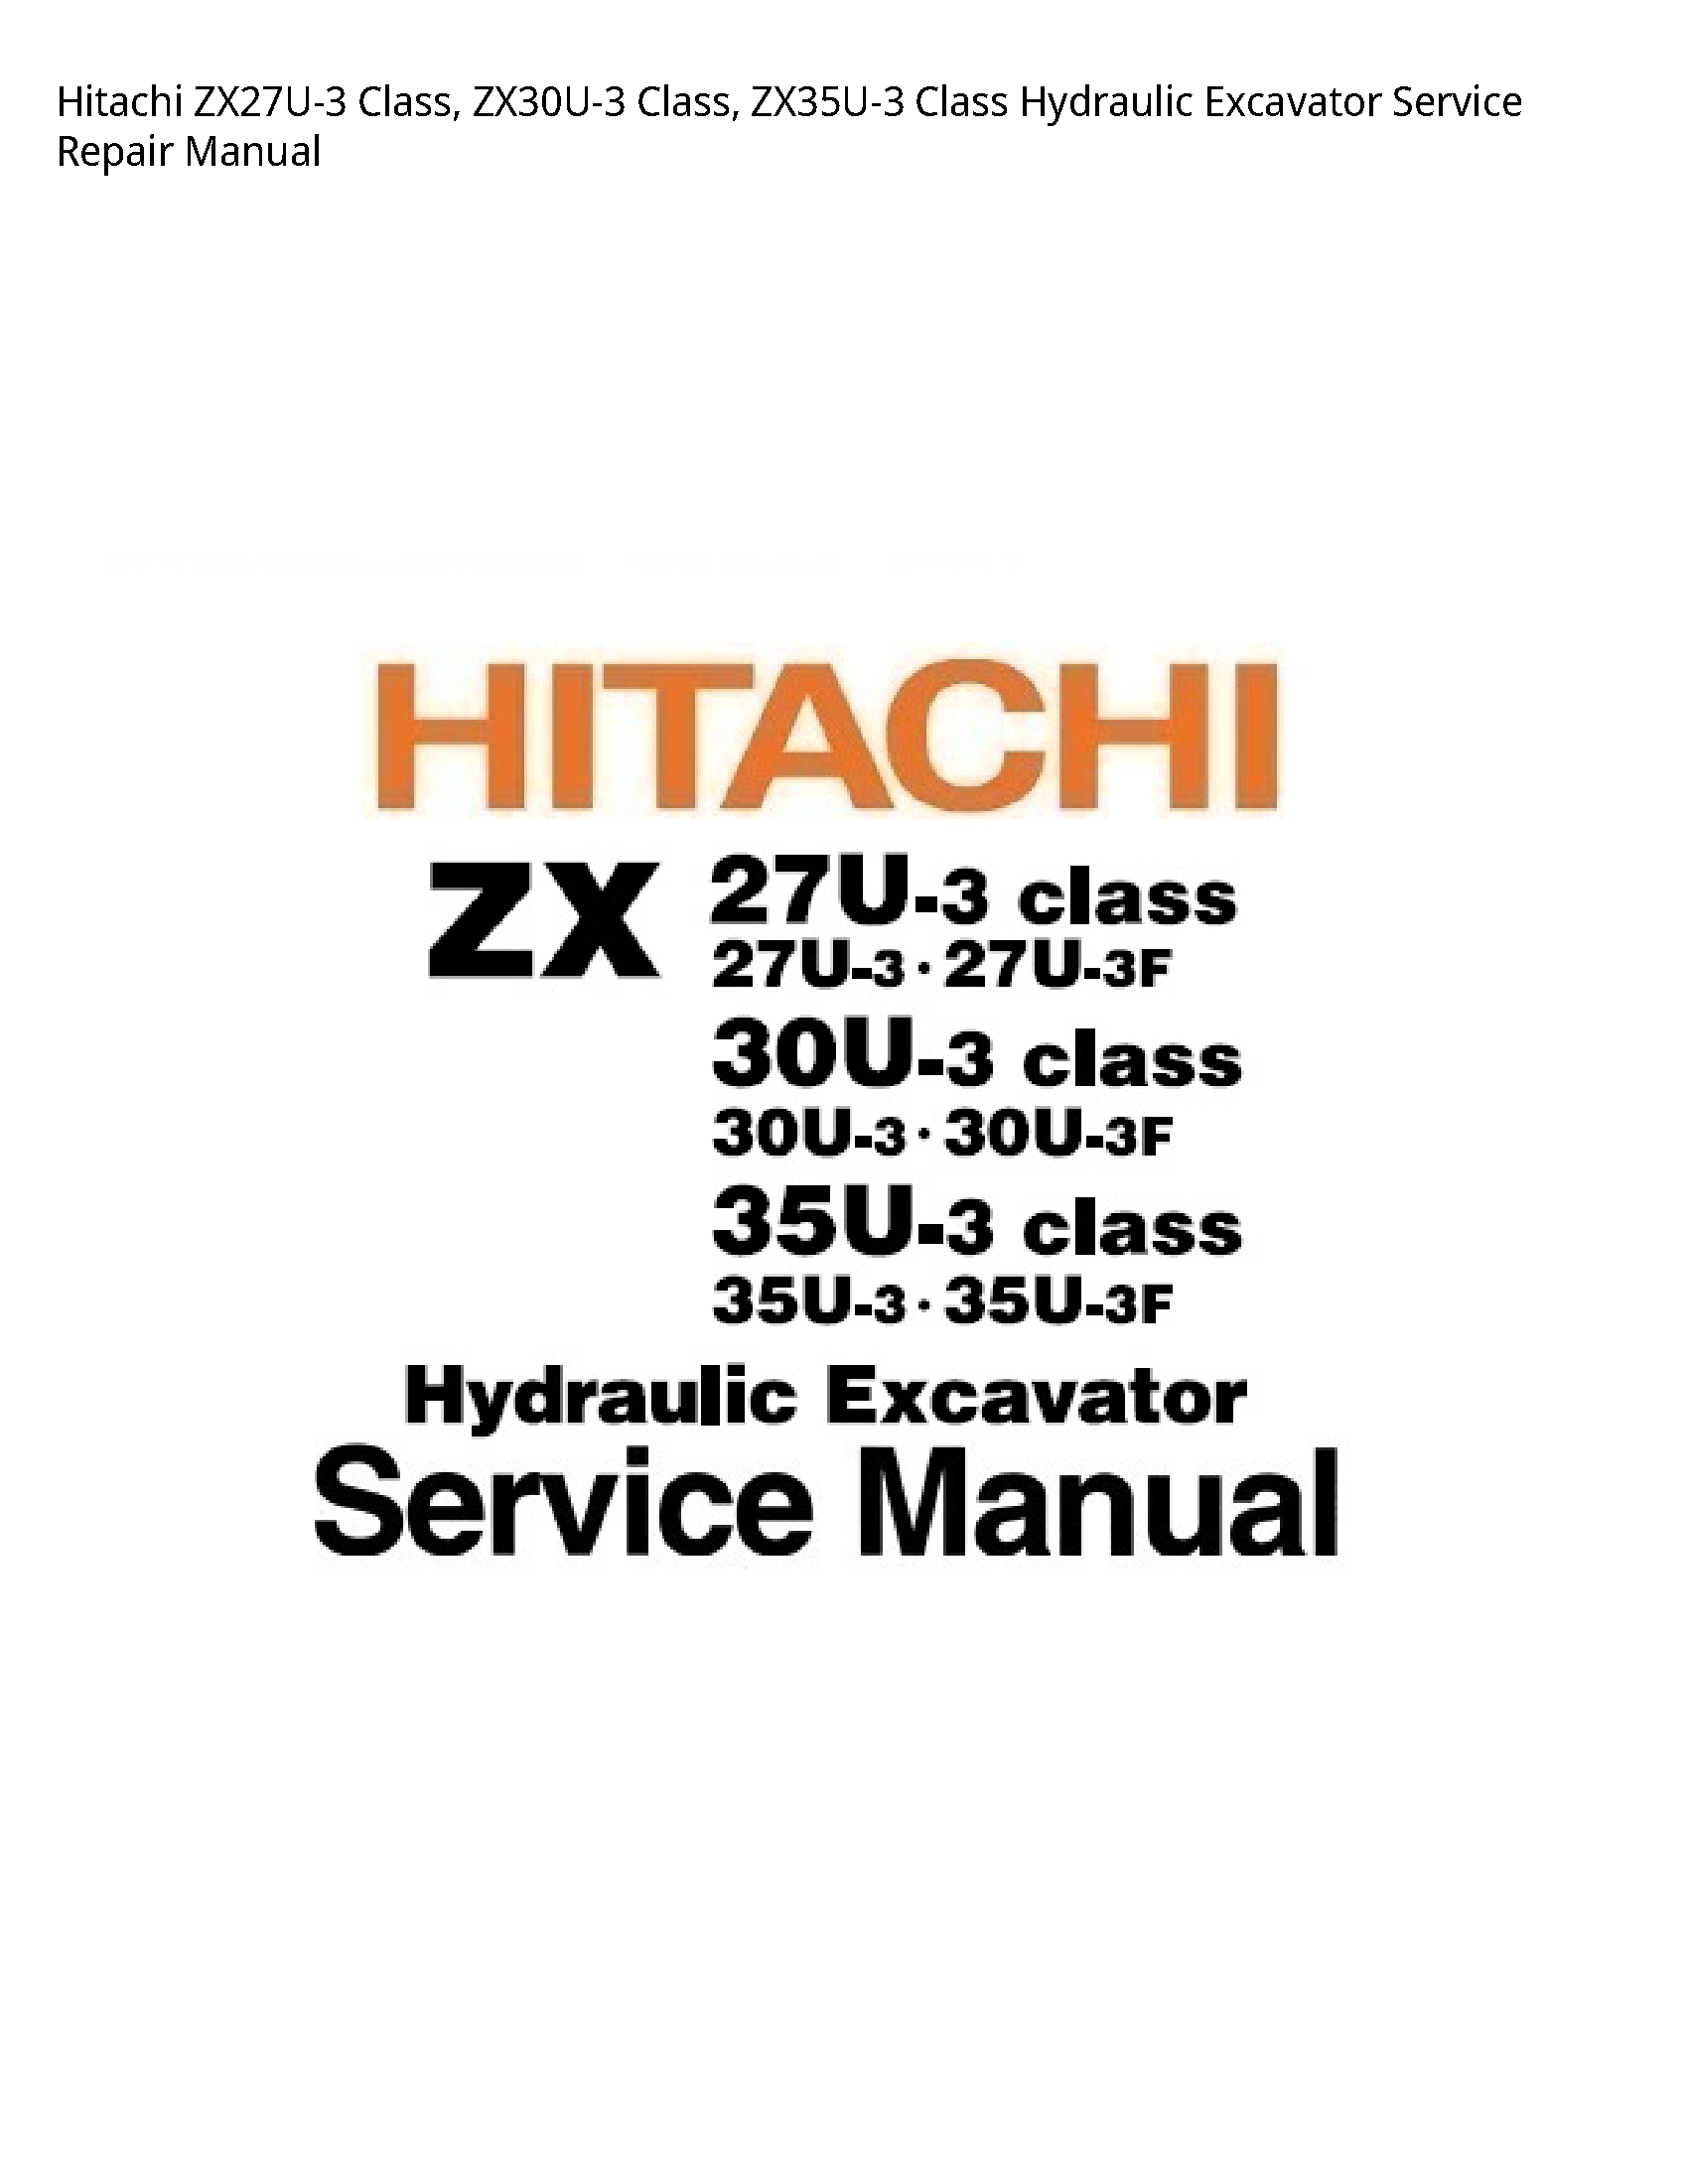 Hitachi ZX27U-3 Class manual